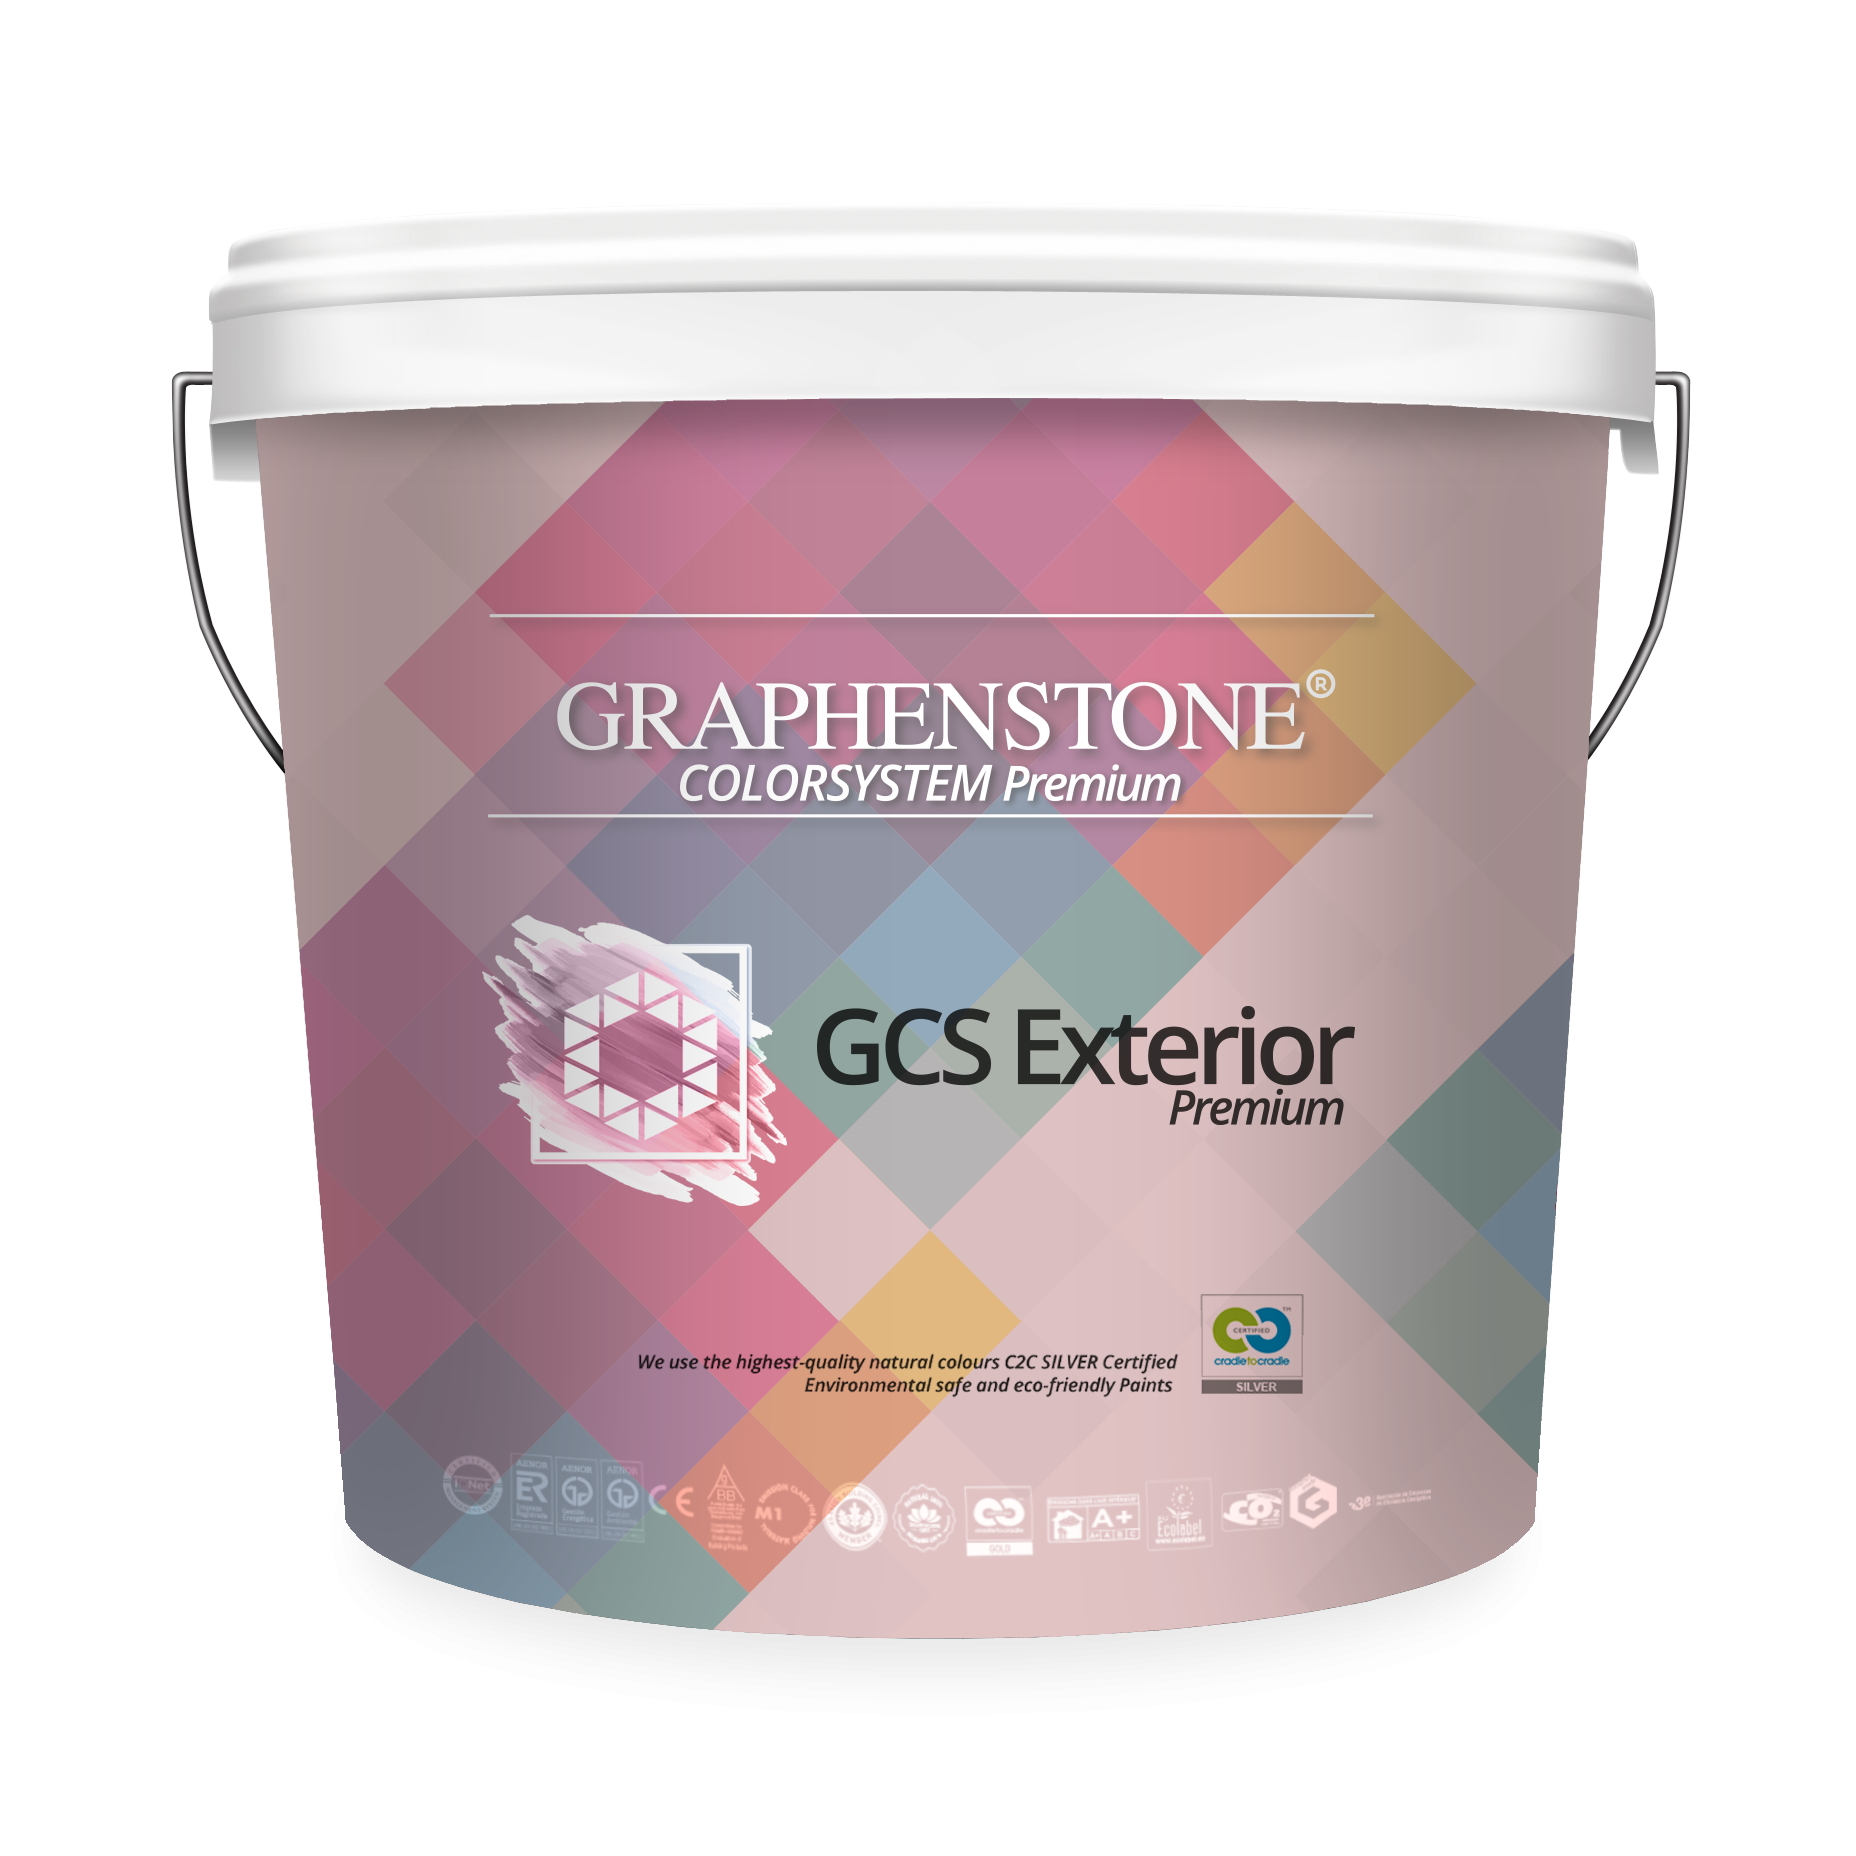 Graphenstone GCS Exterior Premium - External Colour Range 